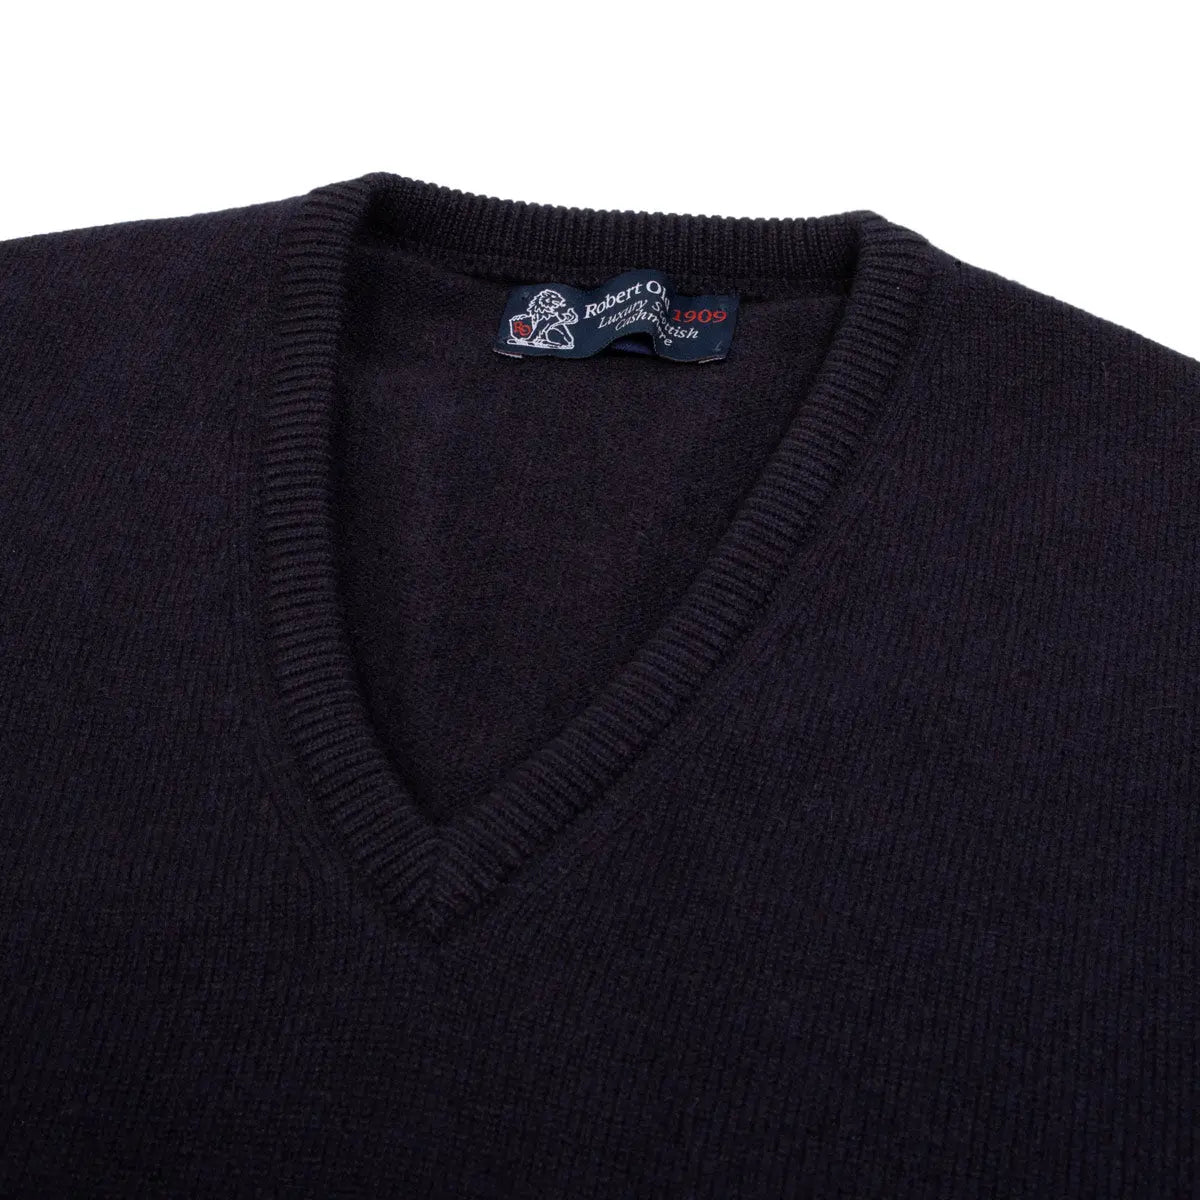 Dark Navy Tobermorey 4ply V-Neck Cashmere Sweater Robert Old